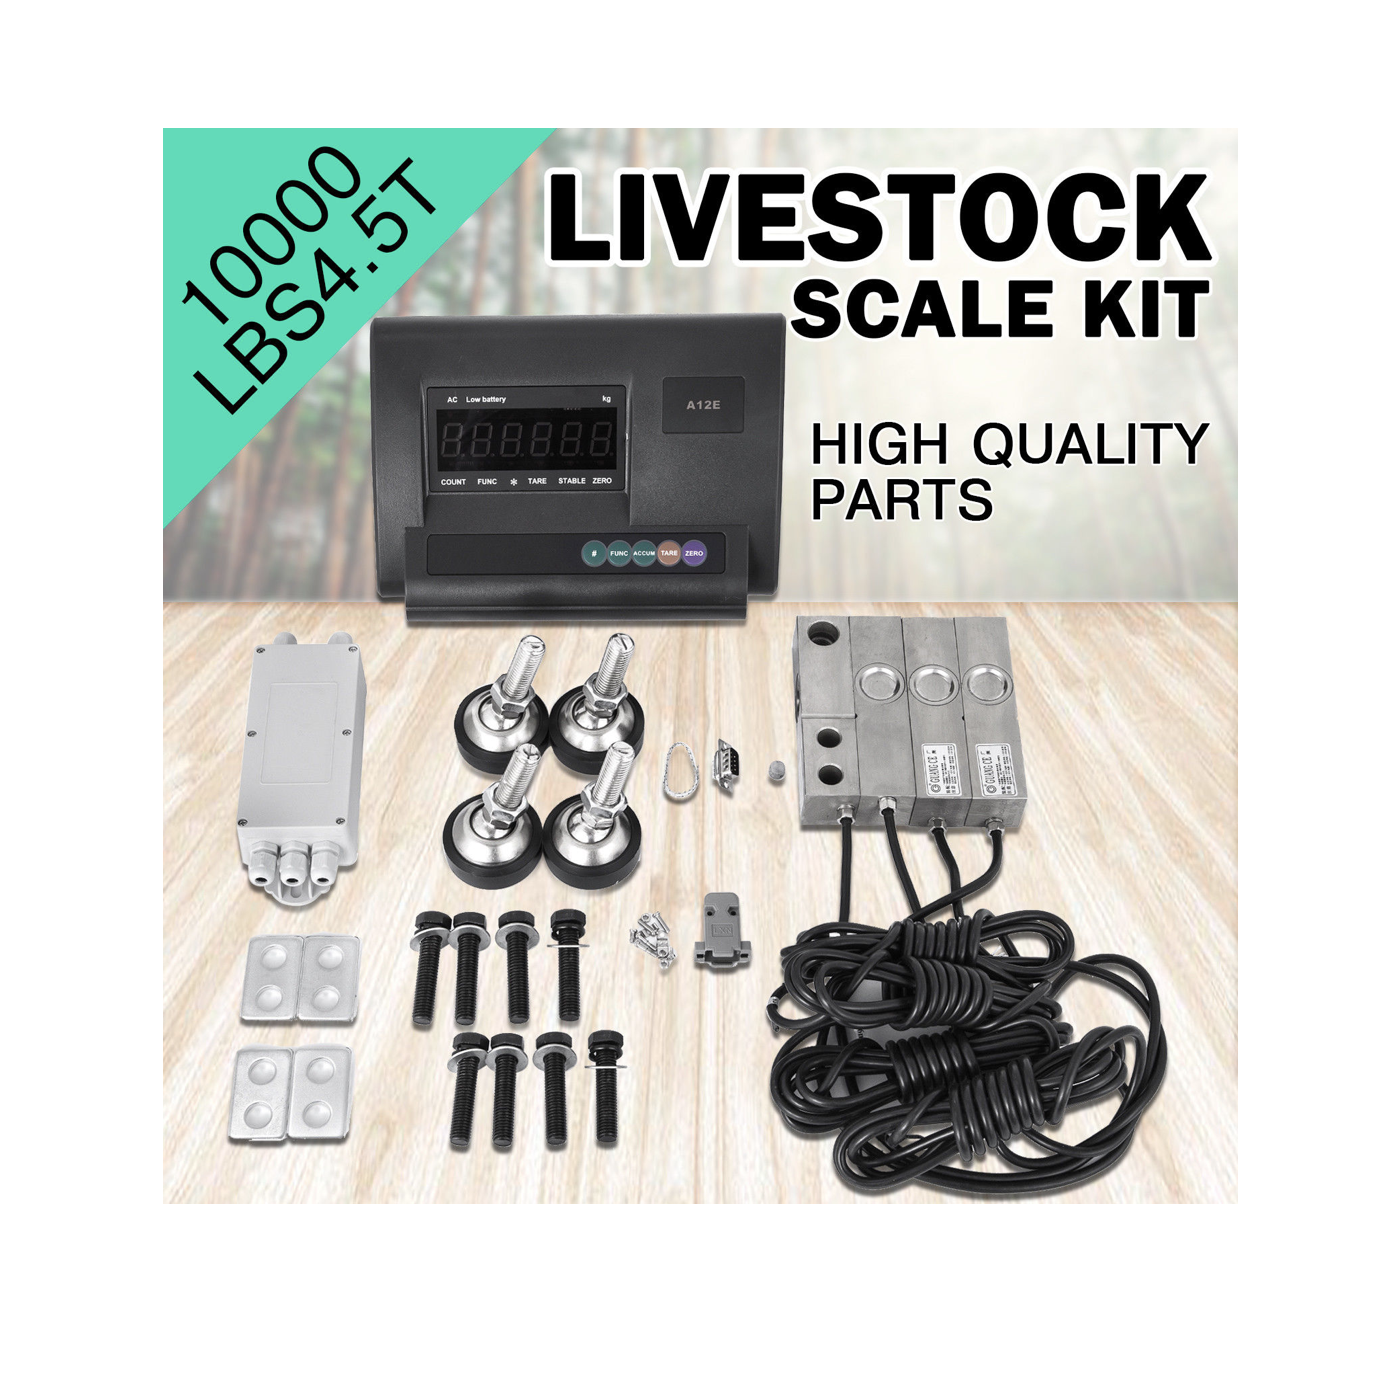 20,000 lb x 2 lb Scale Kit - Livestock Scale Kit - Calibrated